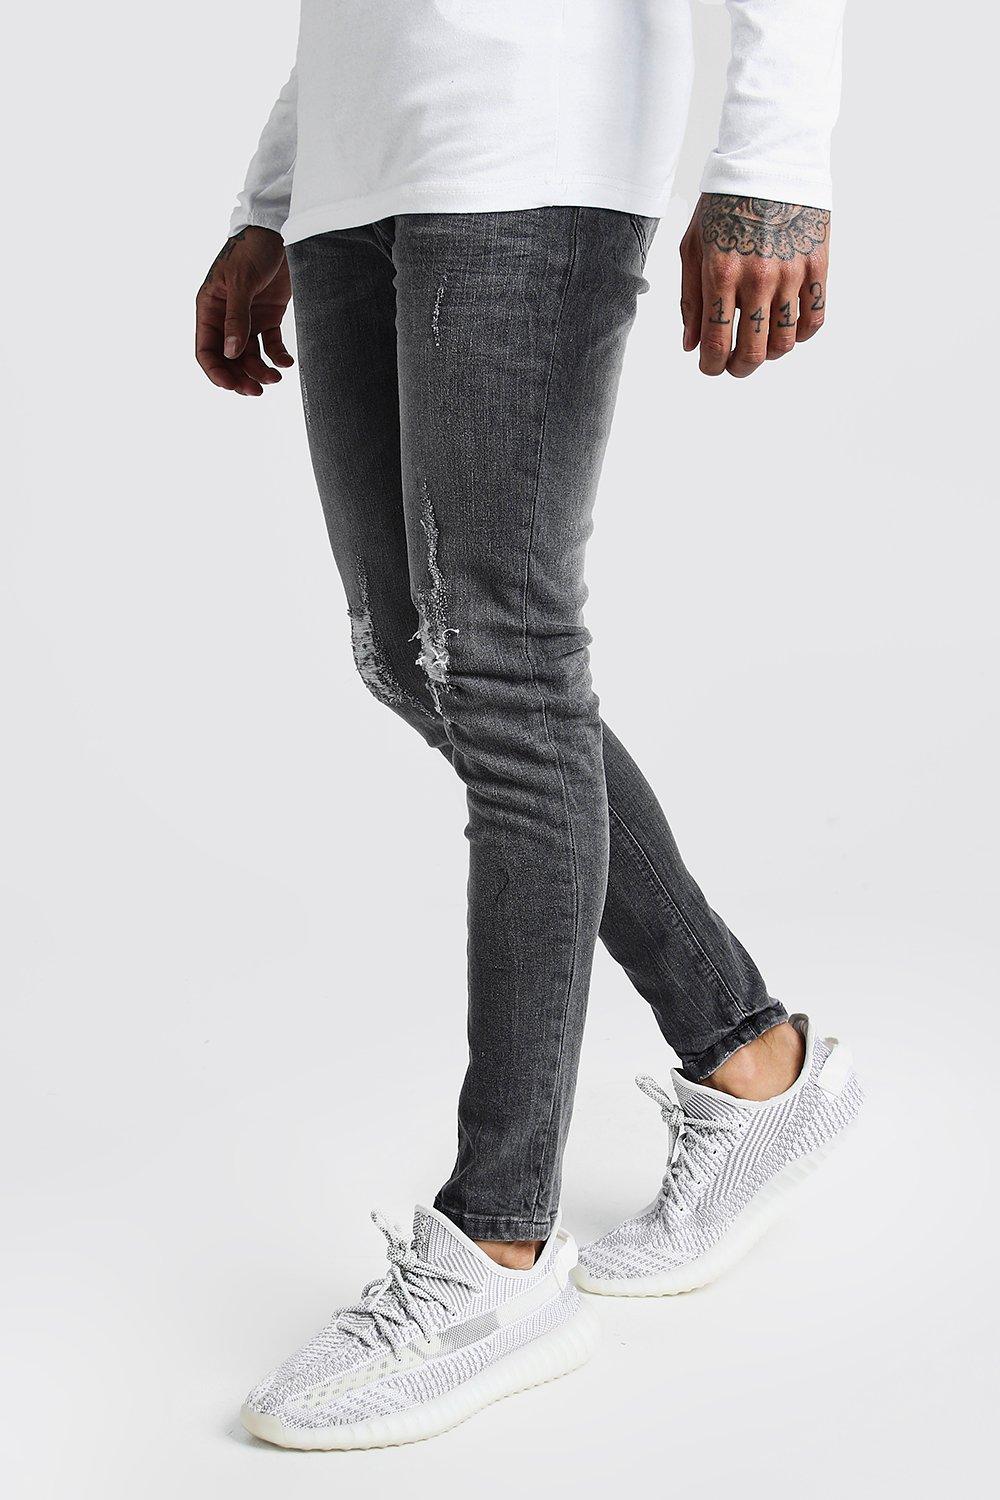 grey ripped knee skinny jeans